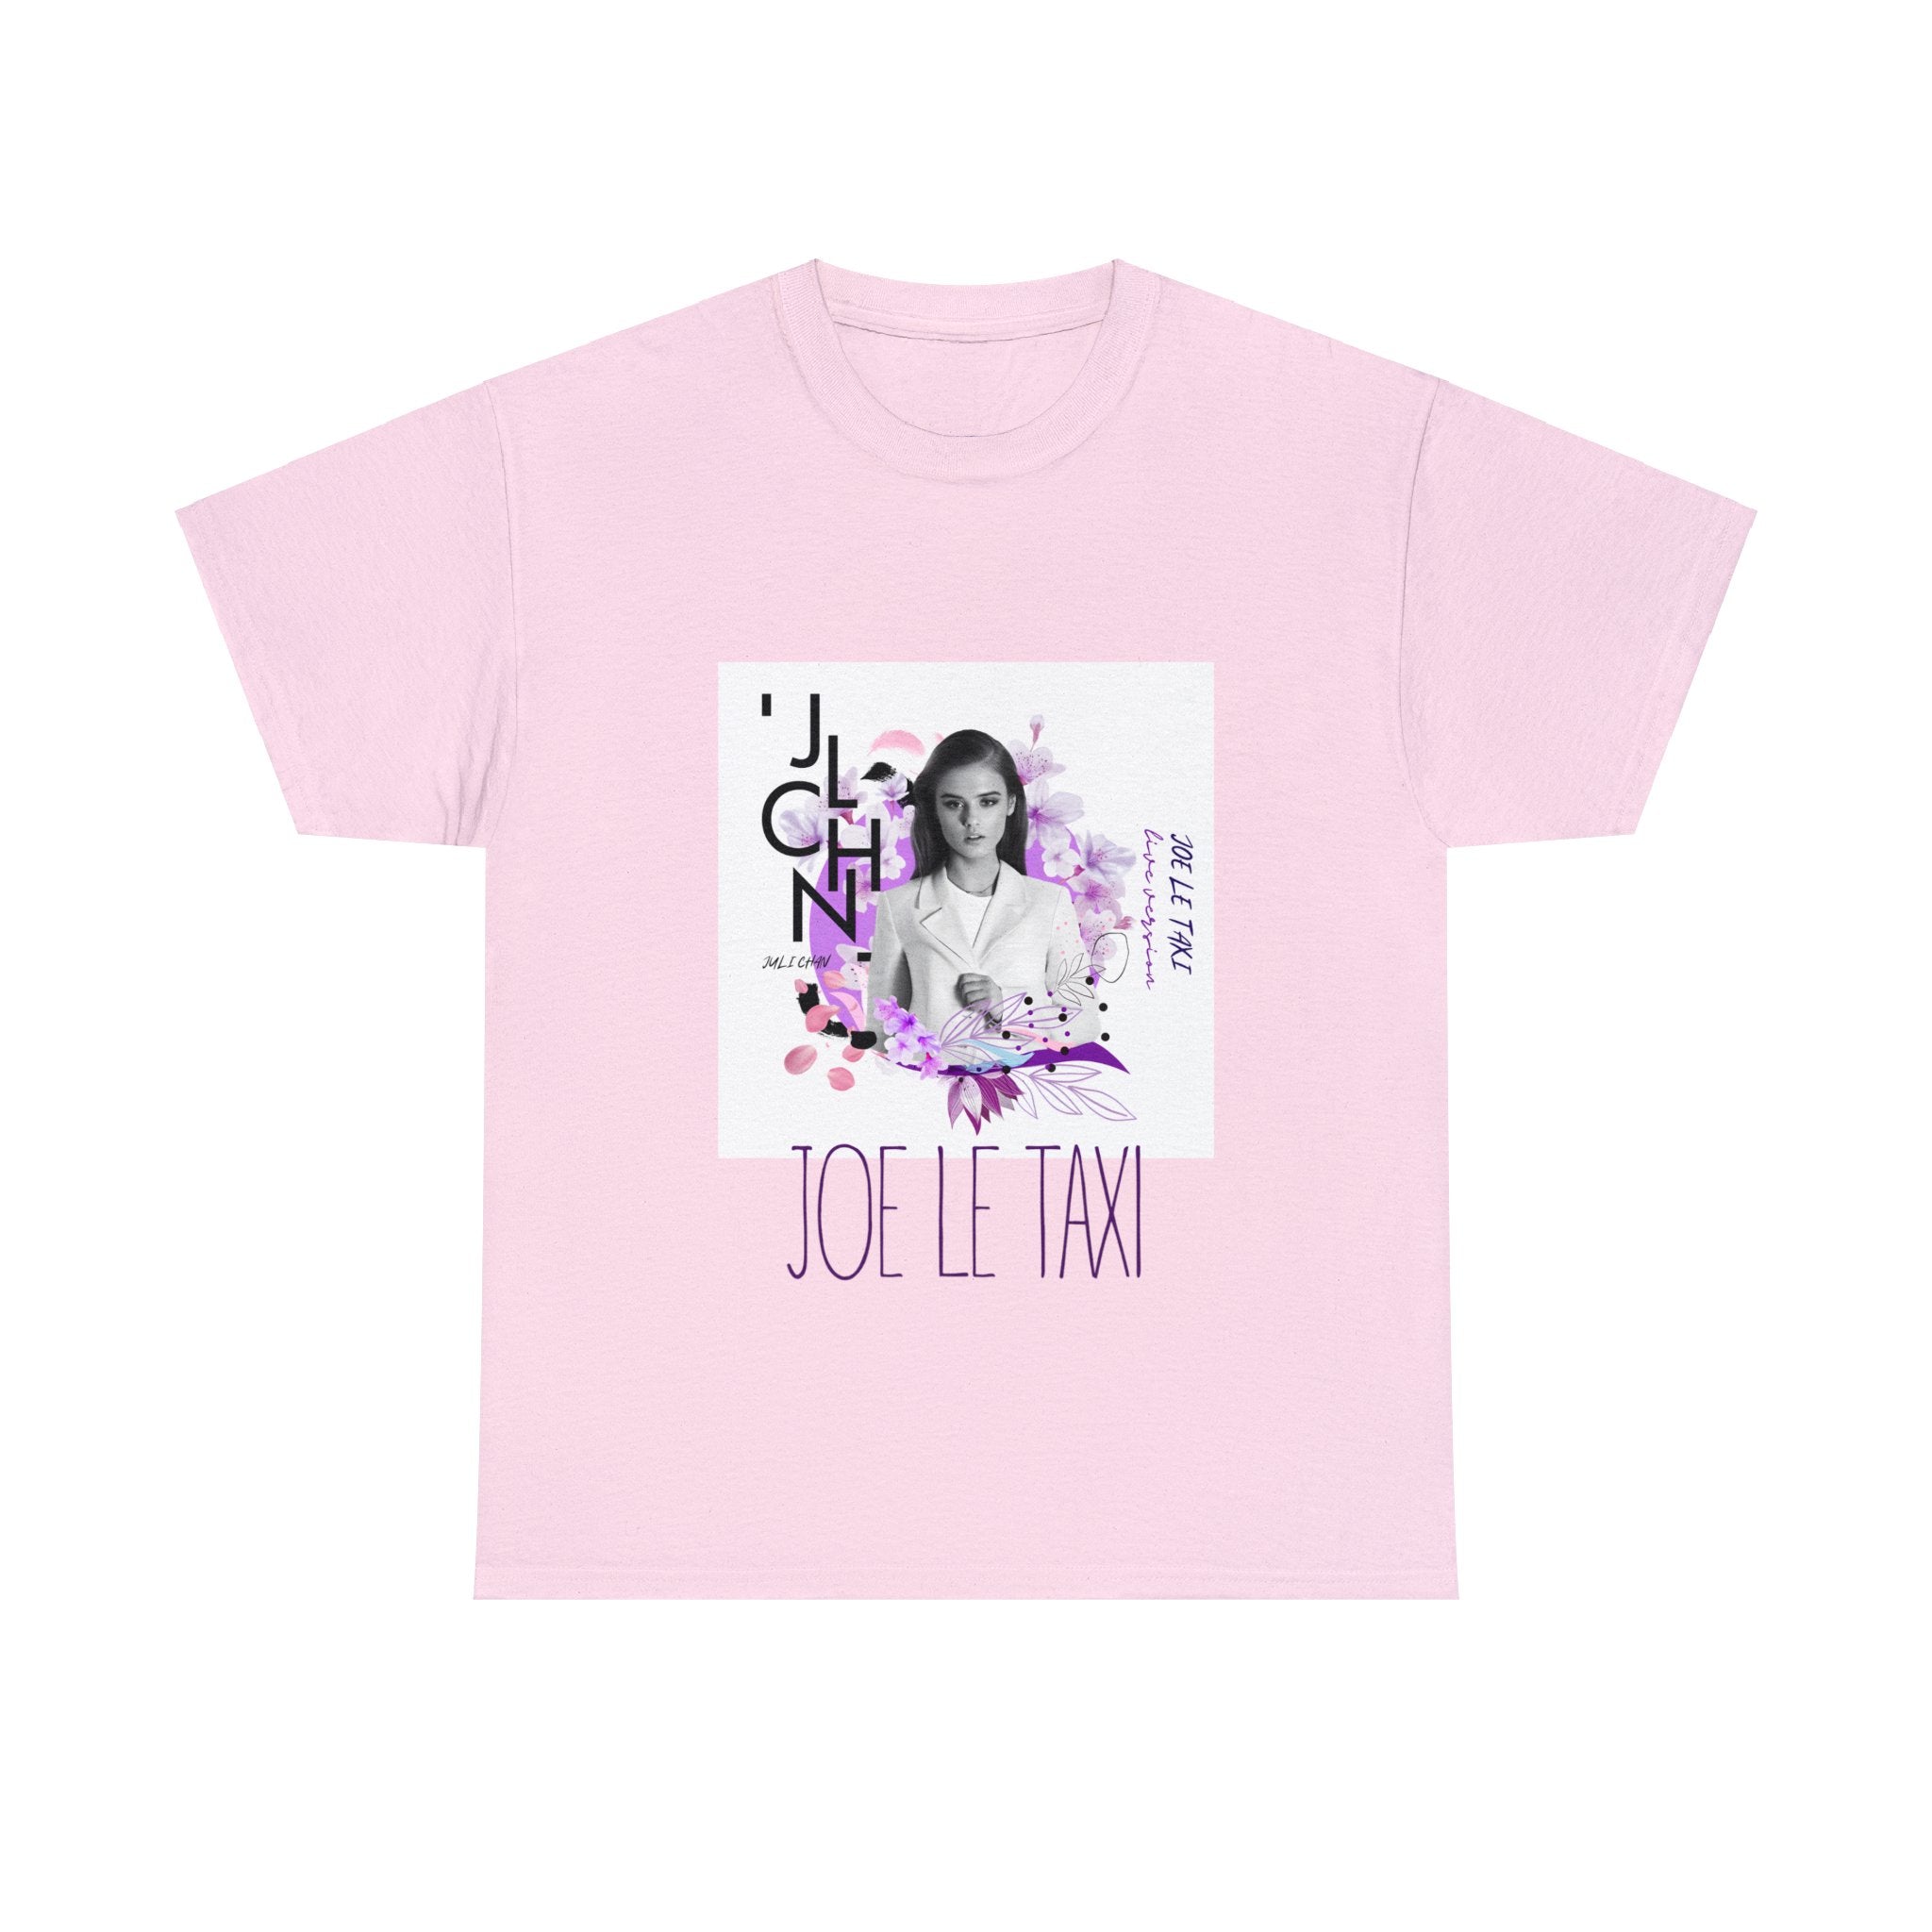 Embrace the Magic: Juli Chan's 'Joe Le Taxi' Cover Art Replica Tee Shirt, A Tribute to 'The Posh Tour'